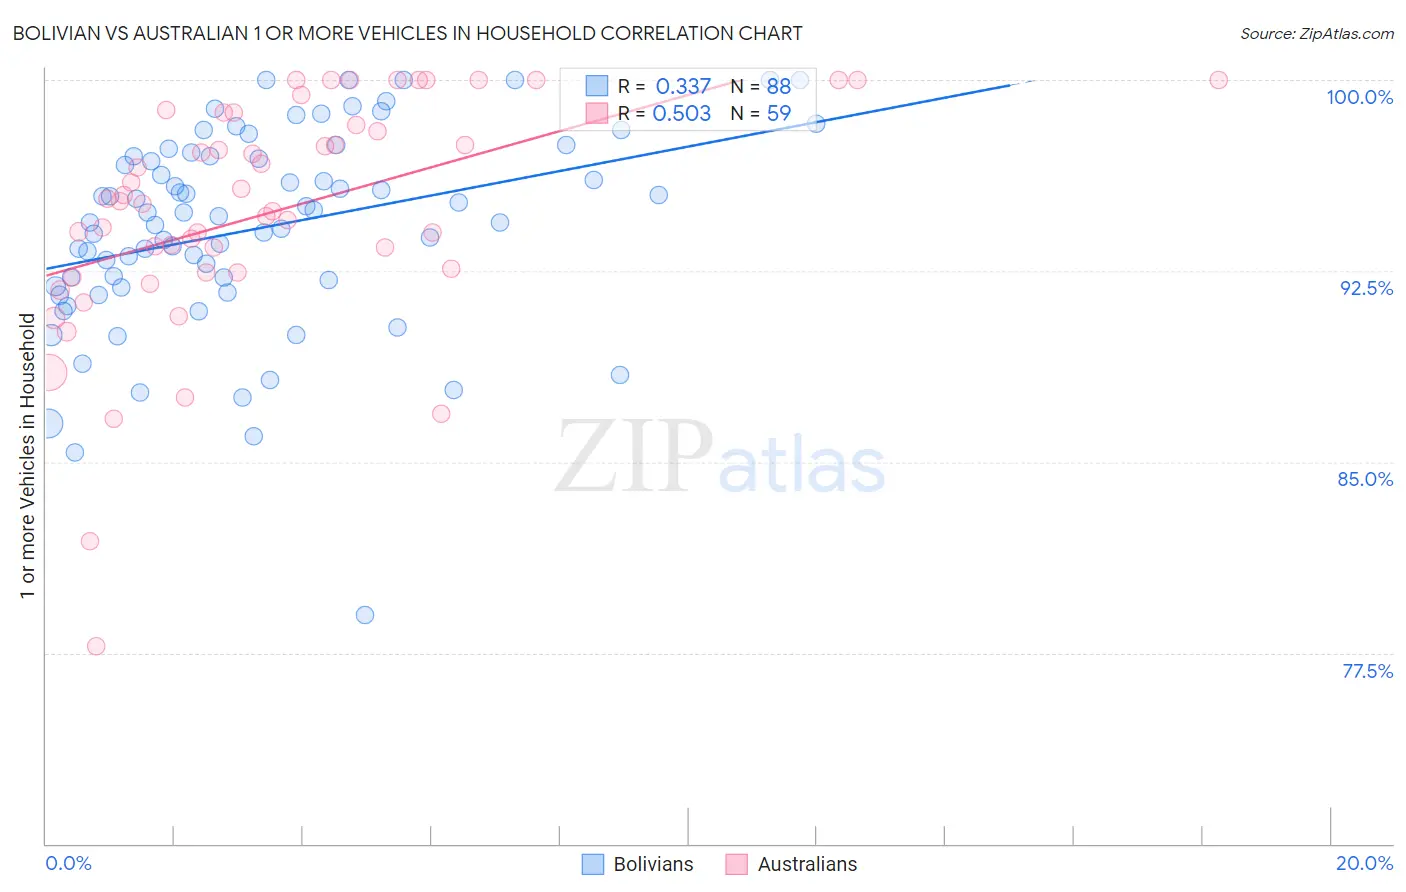 Bolivian vs Australian 1 or more Vehicles in Household